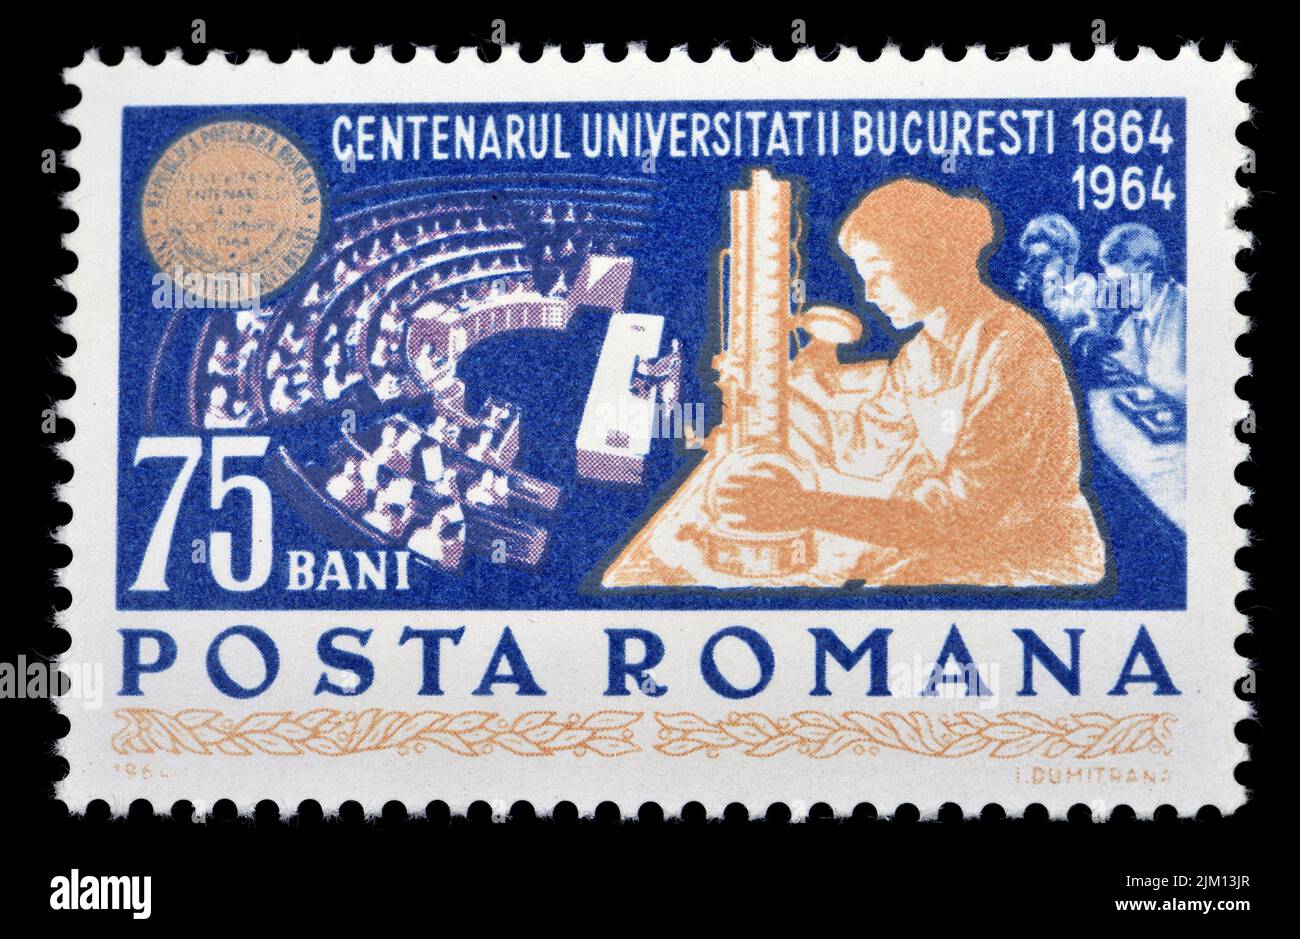 Romanian postage stamp (1964) : Centenary of Bucharest University 1864 - 1964 Stock Photo